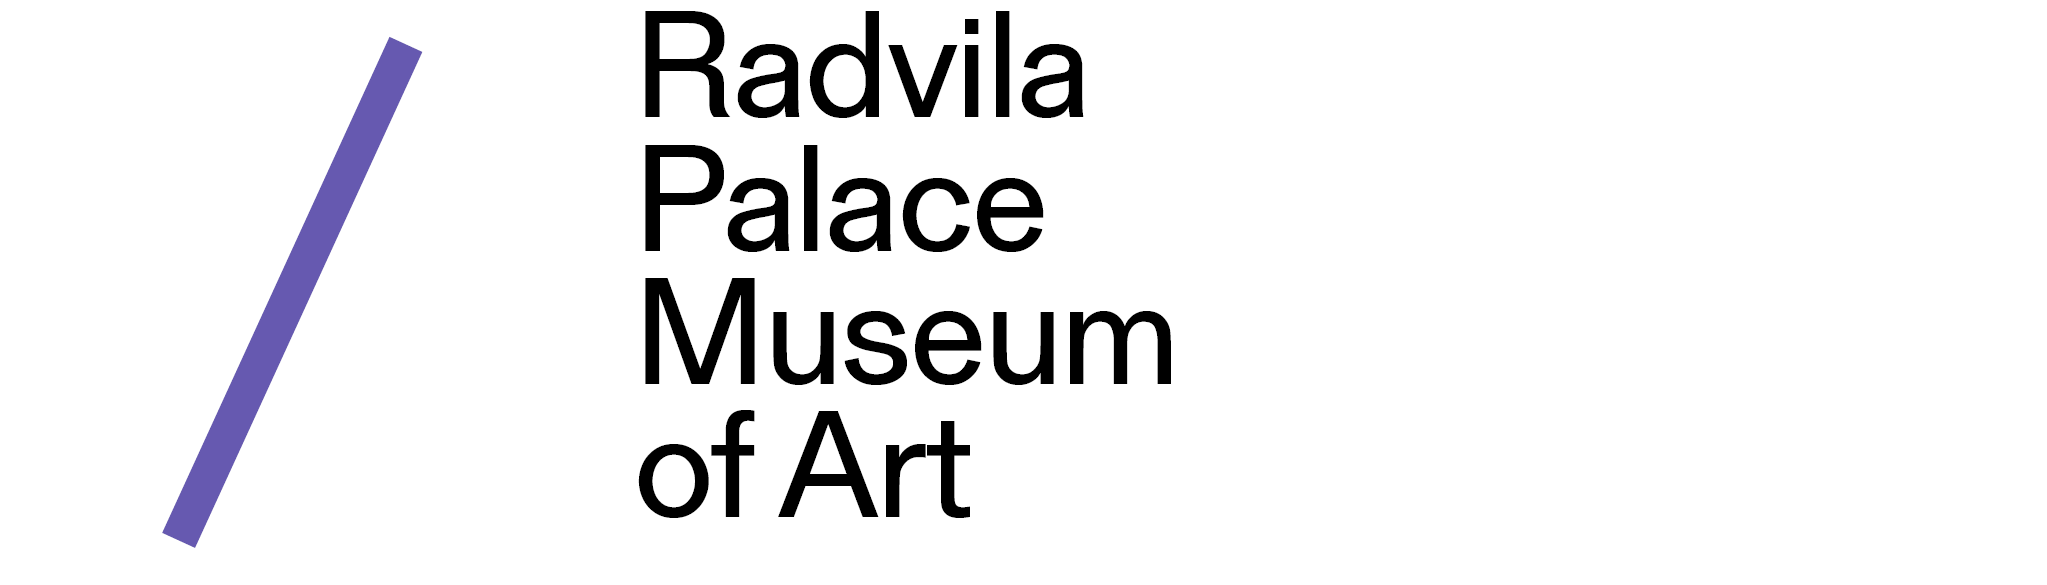 Radvila Palace Museum of Art